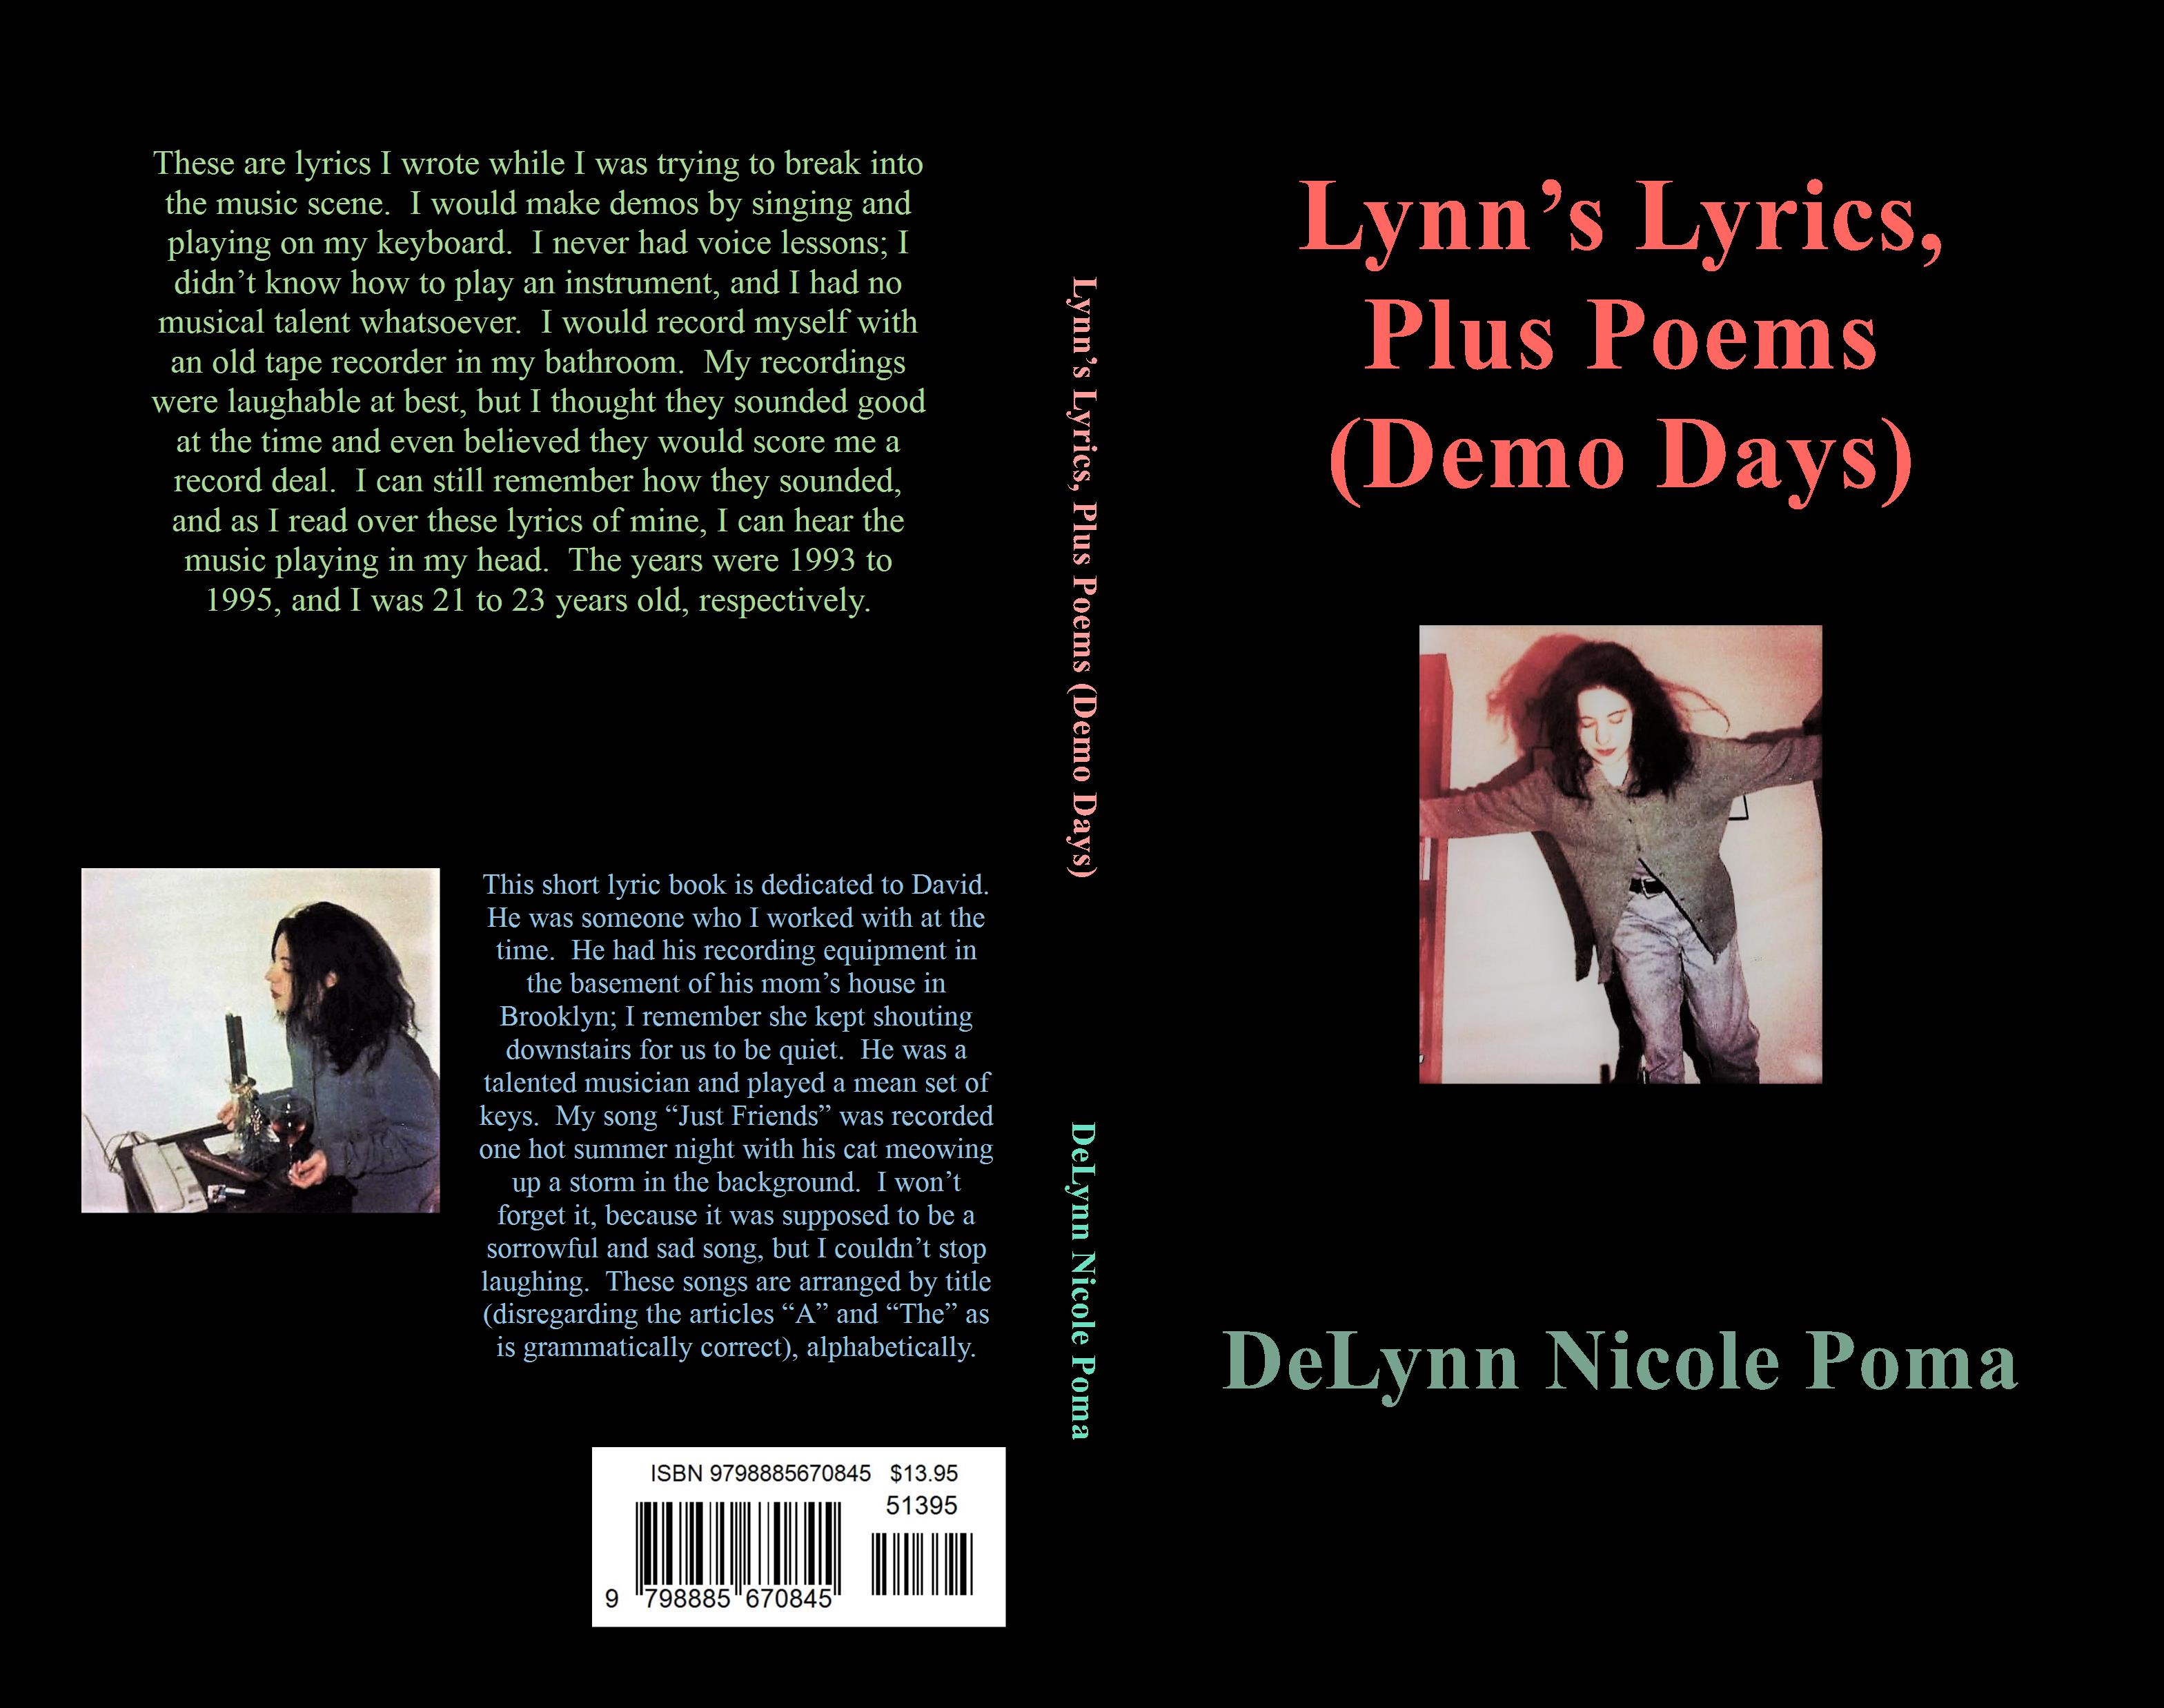 Lynn’s Lyrics, Plus Poems (Demo Days) cover image